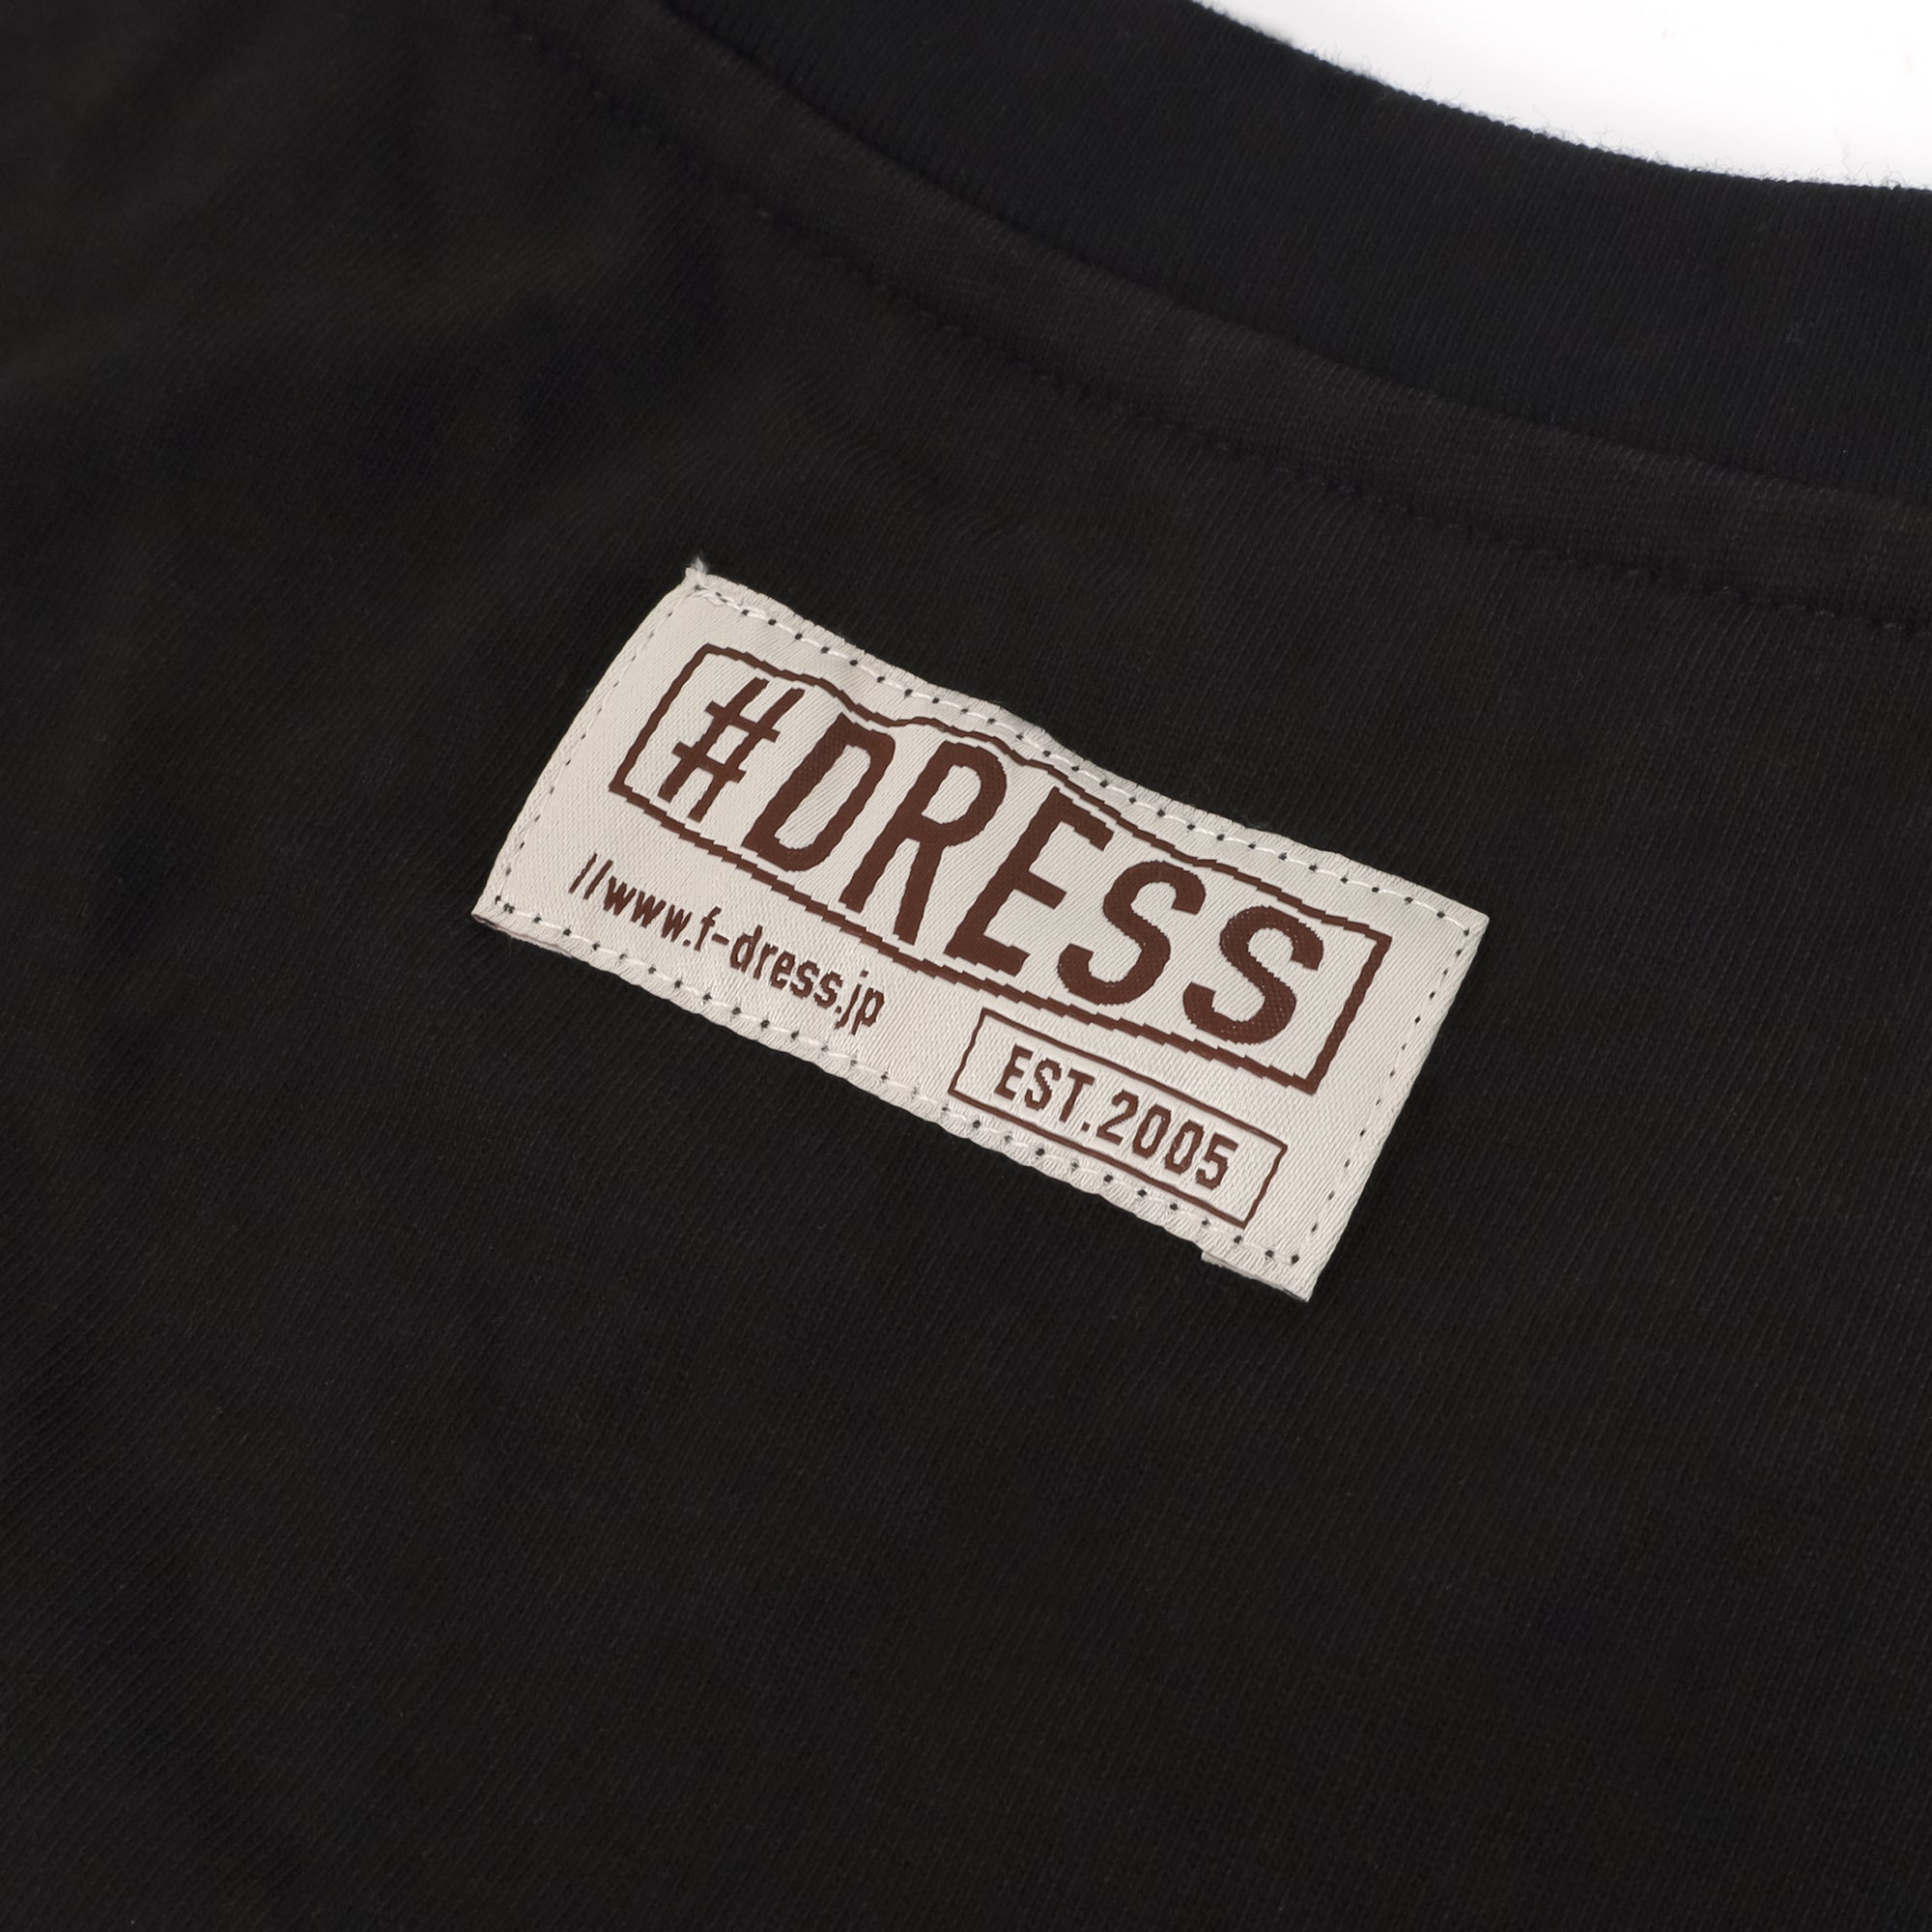 DRESS エンボスロゴ Tシャツ【ブラック】